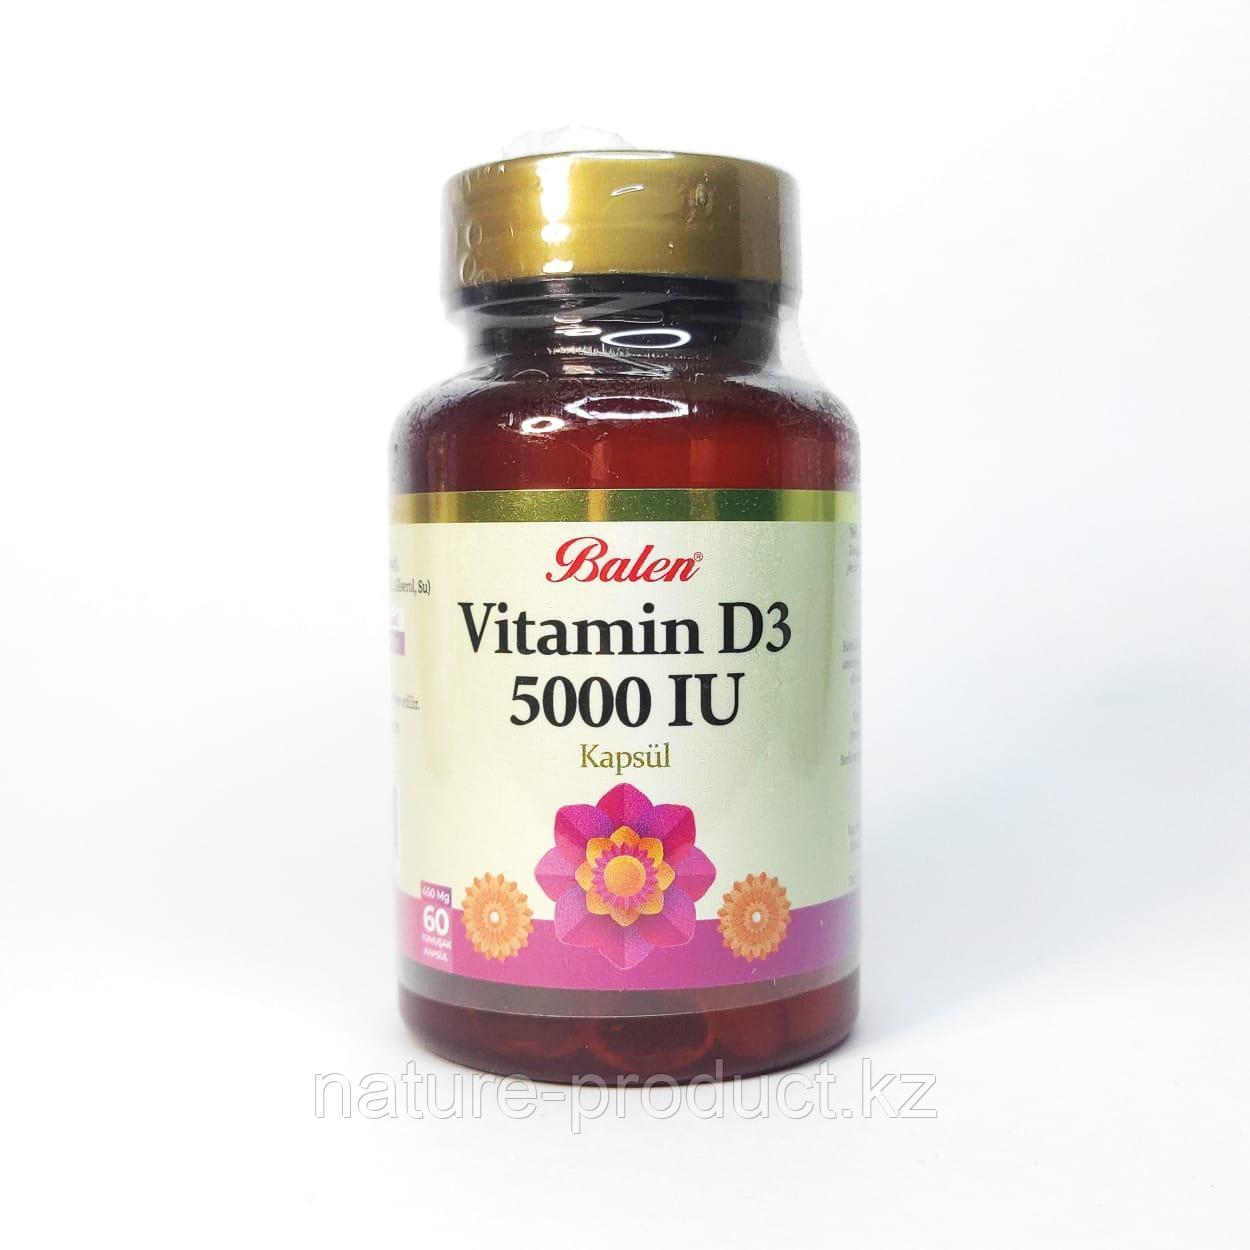 Витамин Д3, Vitamin D3 5000 IU Balen 60 капсул Турция